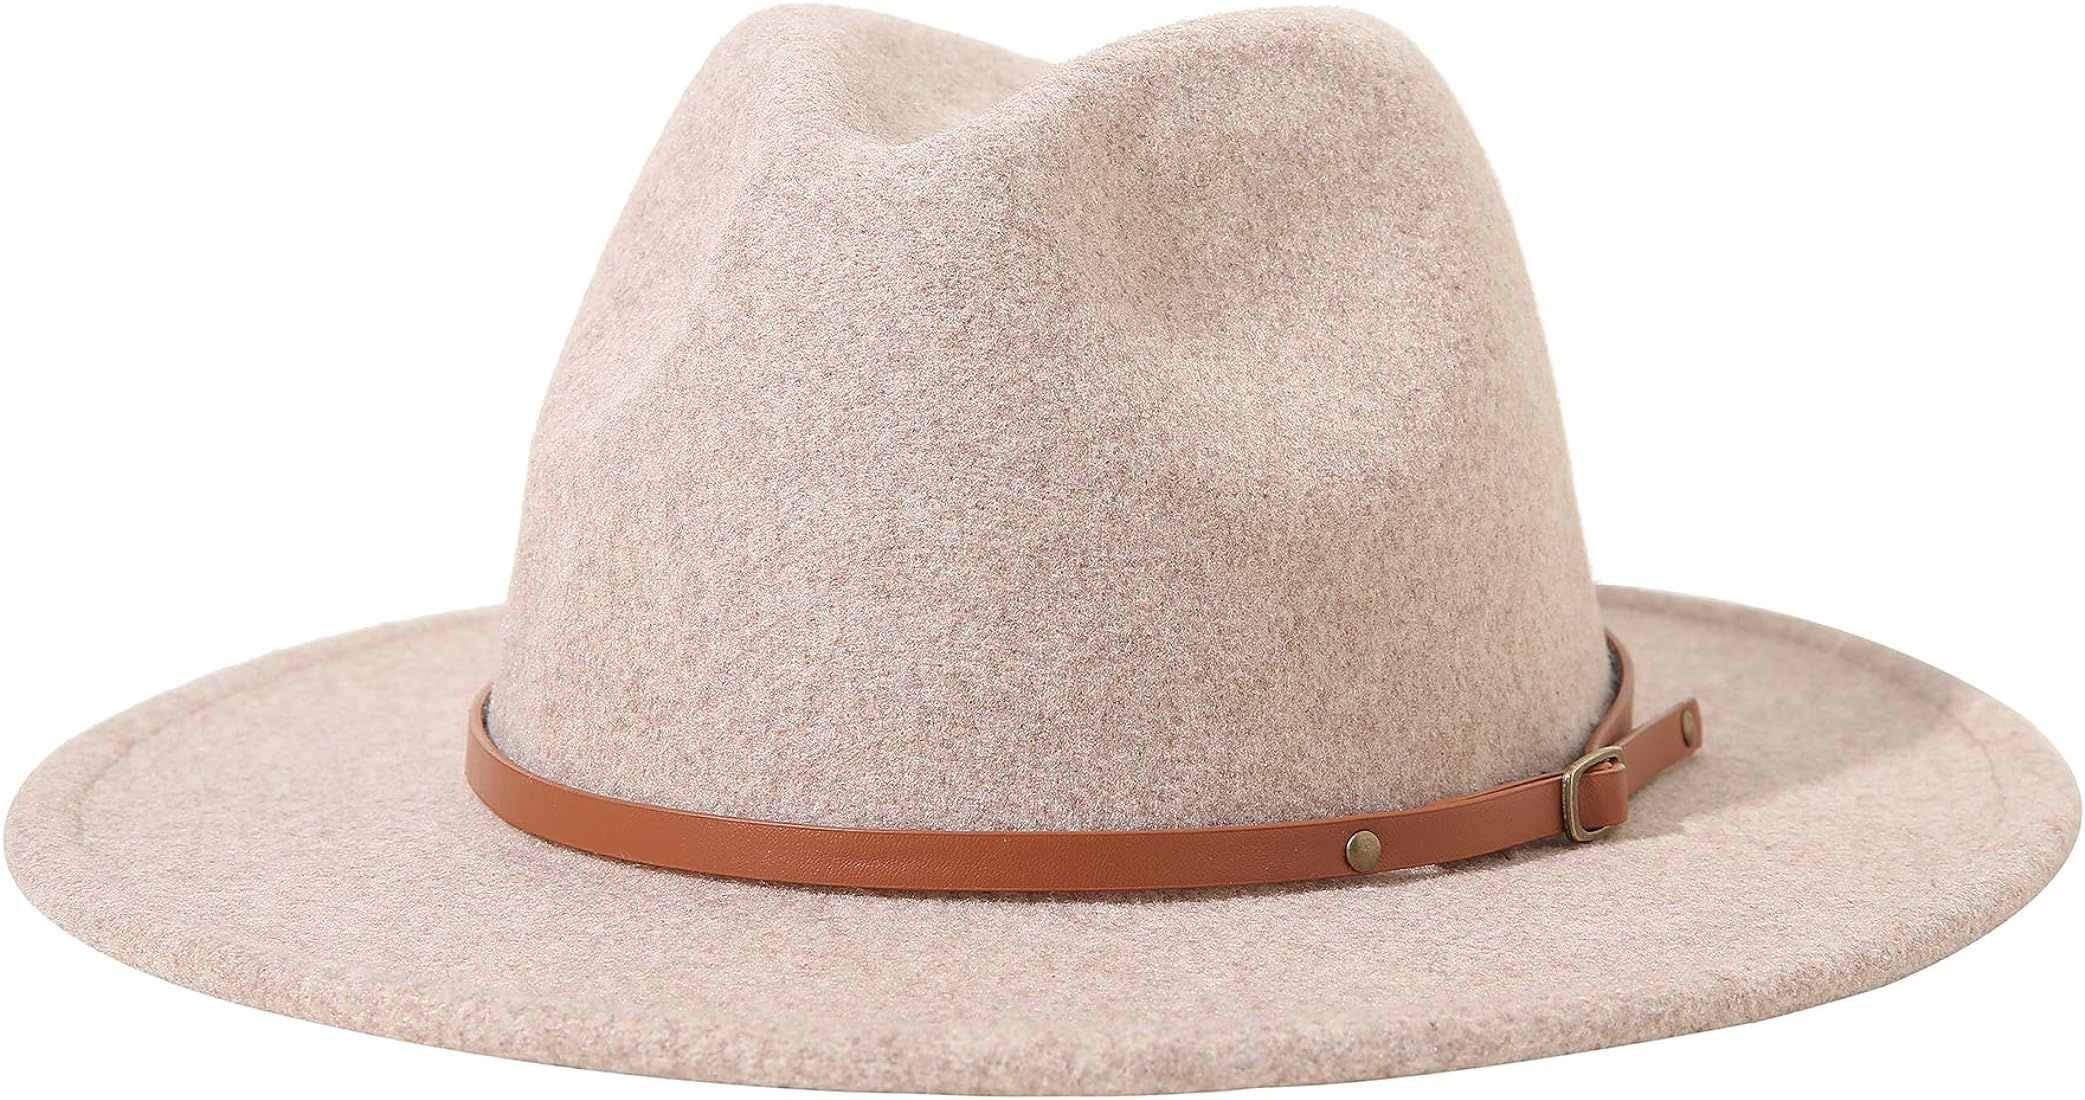 Women Lady Felt Fedora Hat Wide Brim Wool Panama Hats with Band Fit Size 6 8/7-7 1/4 | Amazon (US)